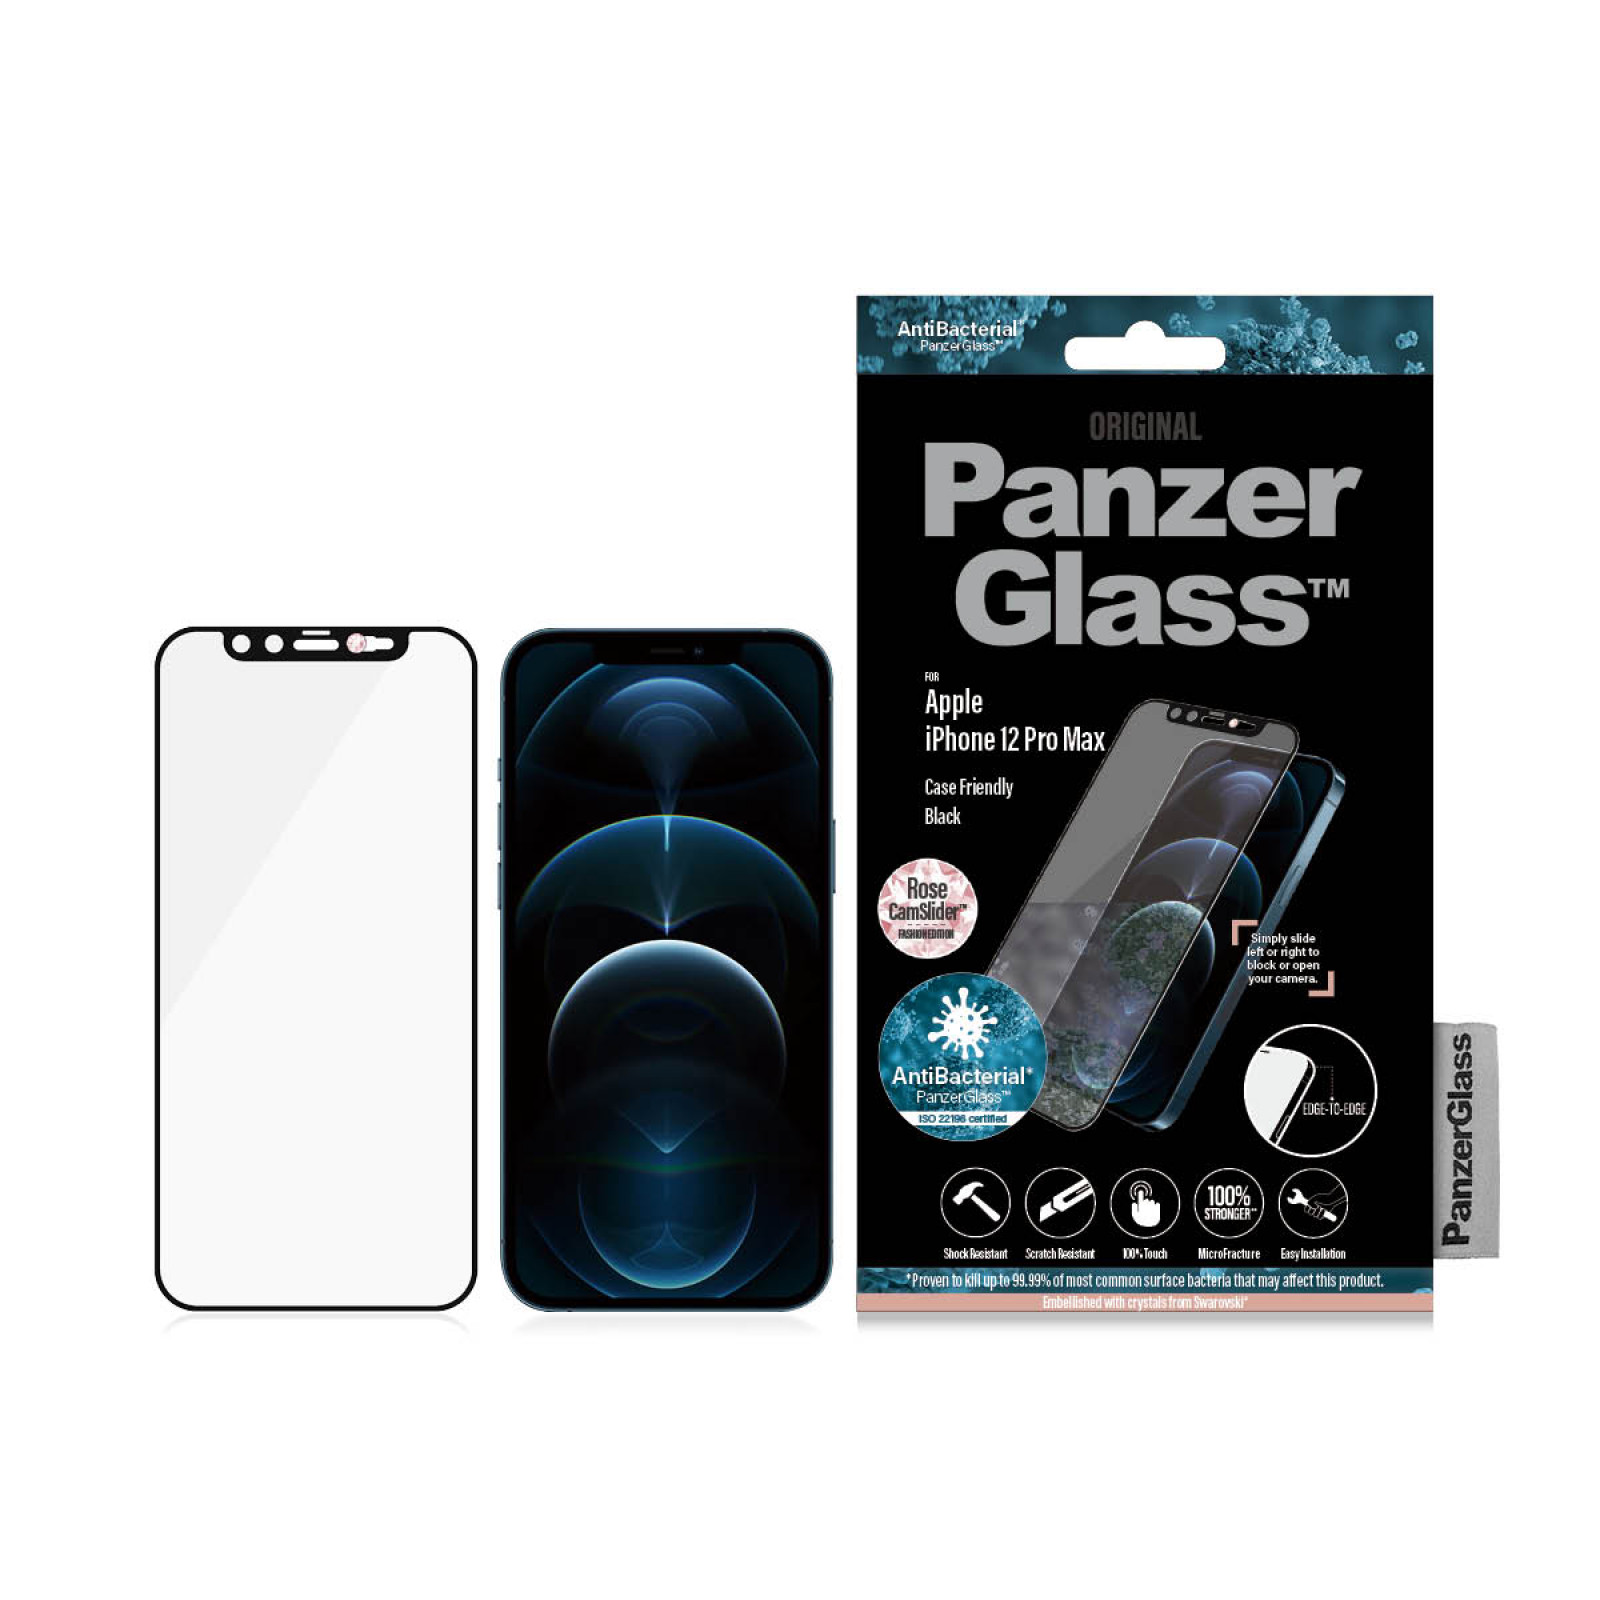 Стъклен протектор PanzerGlass за Iphone 12 Pro Max, CaseFriendly, CamSlaider, Swarovski Rose Edition